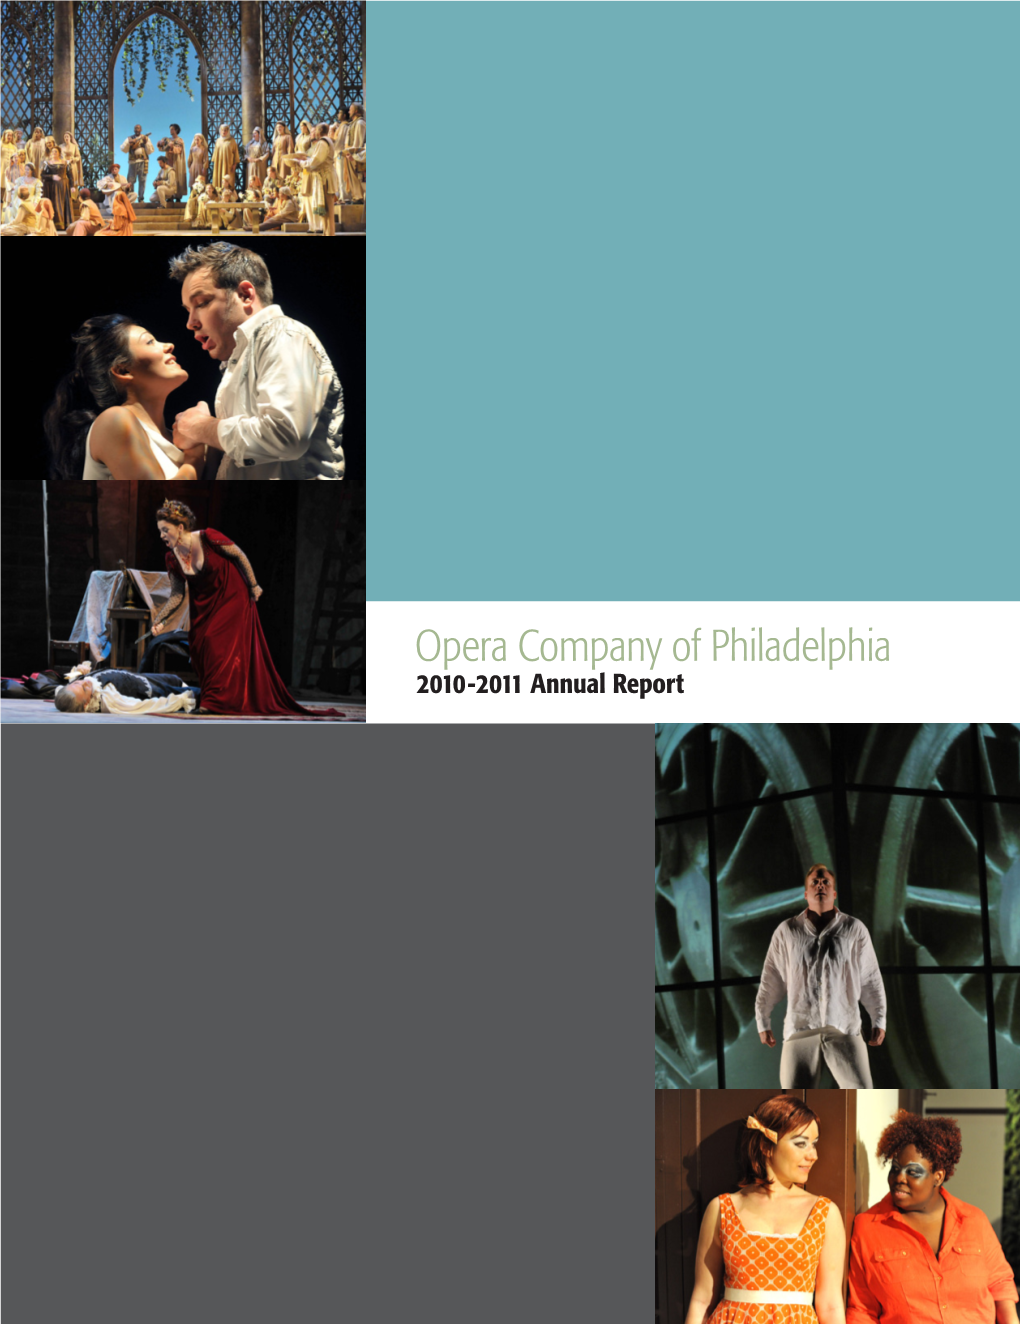 Opera Company of Philadelphia 2010-2011 Annual Report Welcome 1